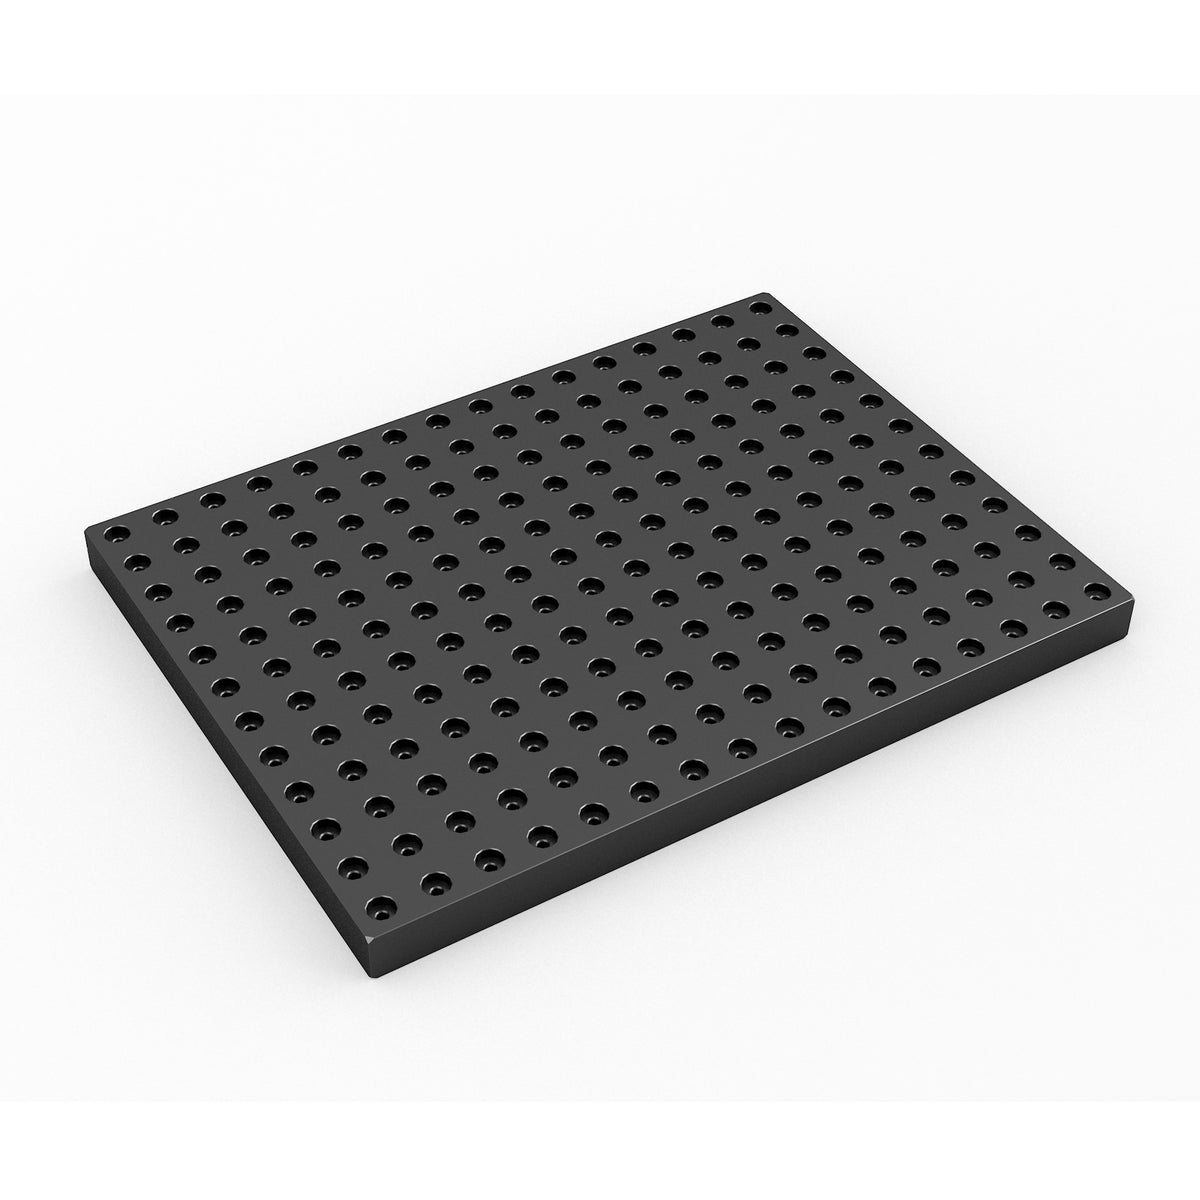 CMM Fixture Grid base plate 25x1200x4200mm